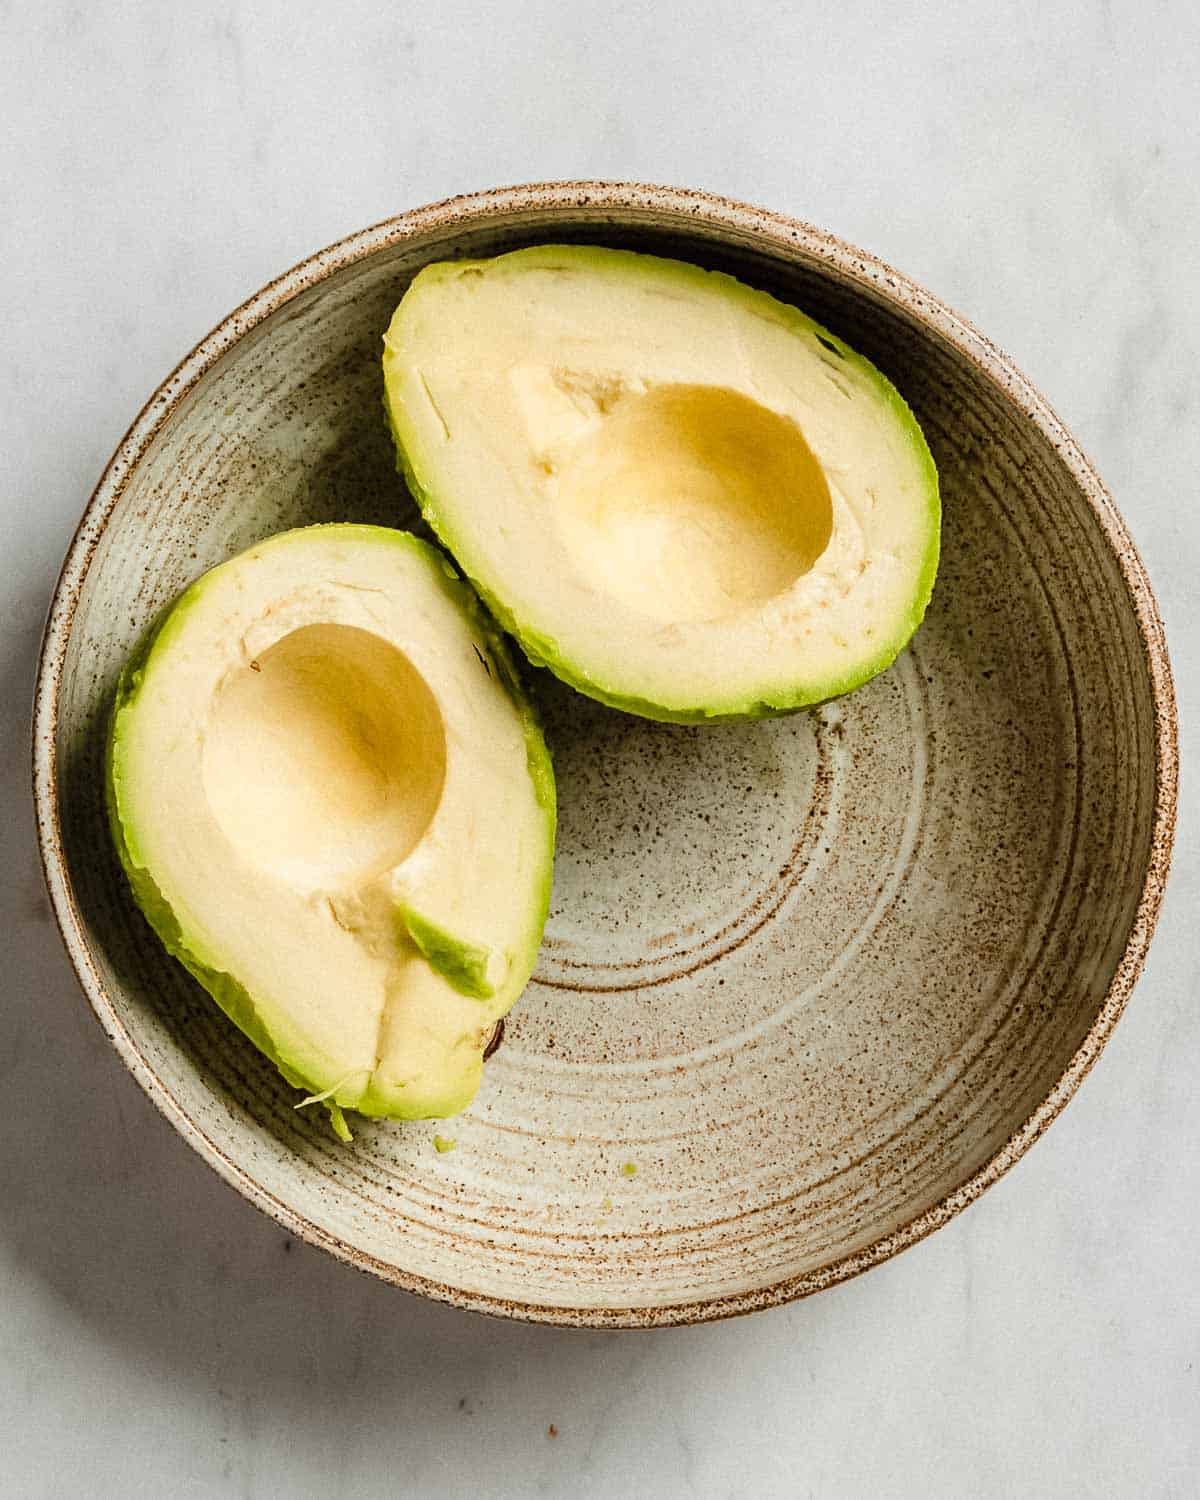 peeled avocado in a bowl.